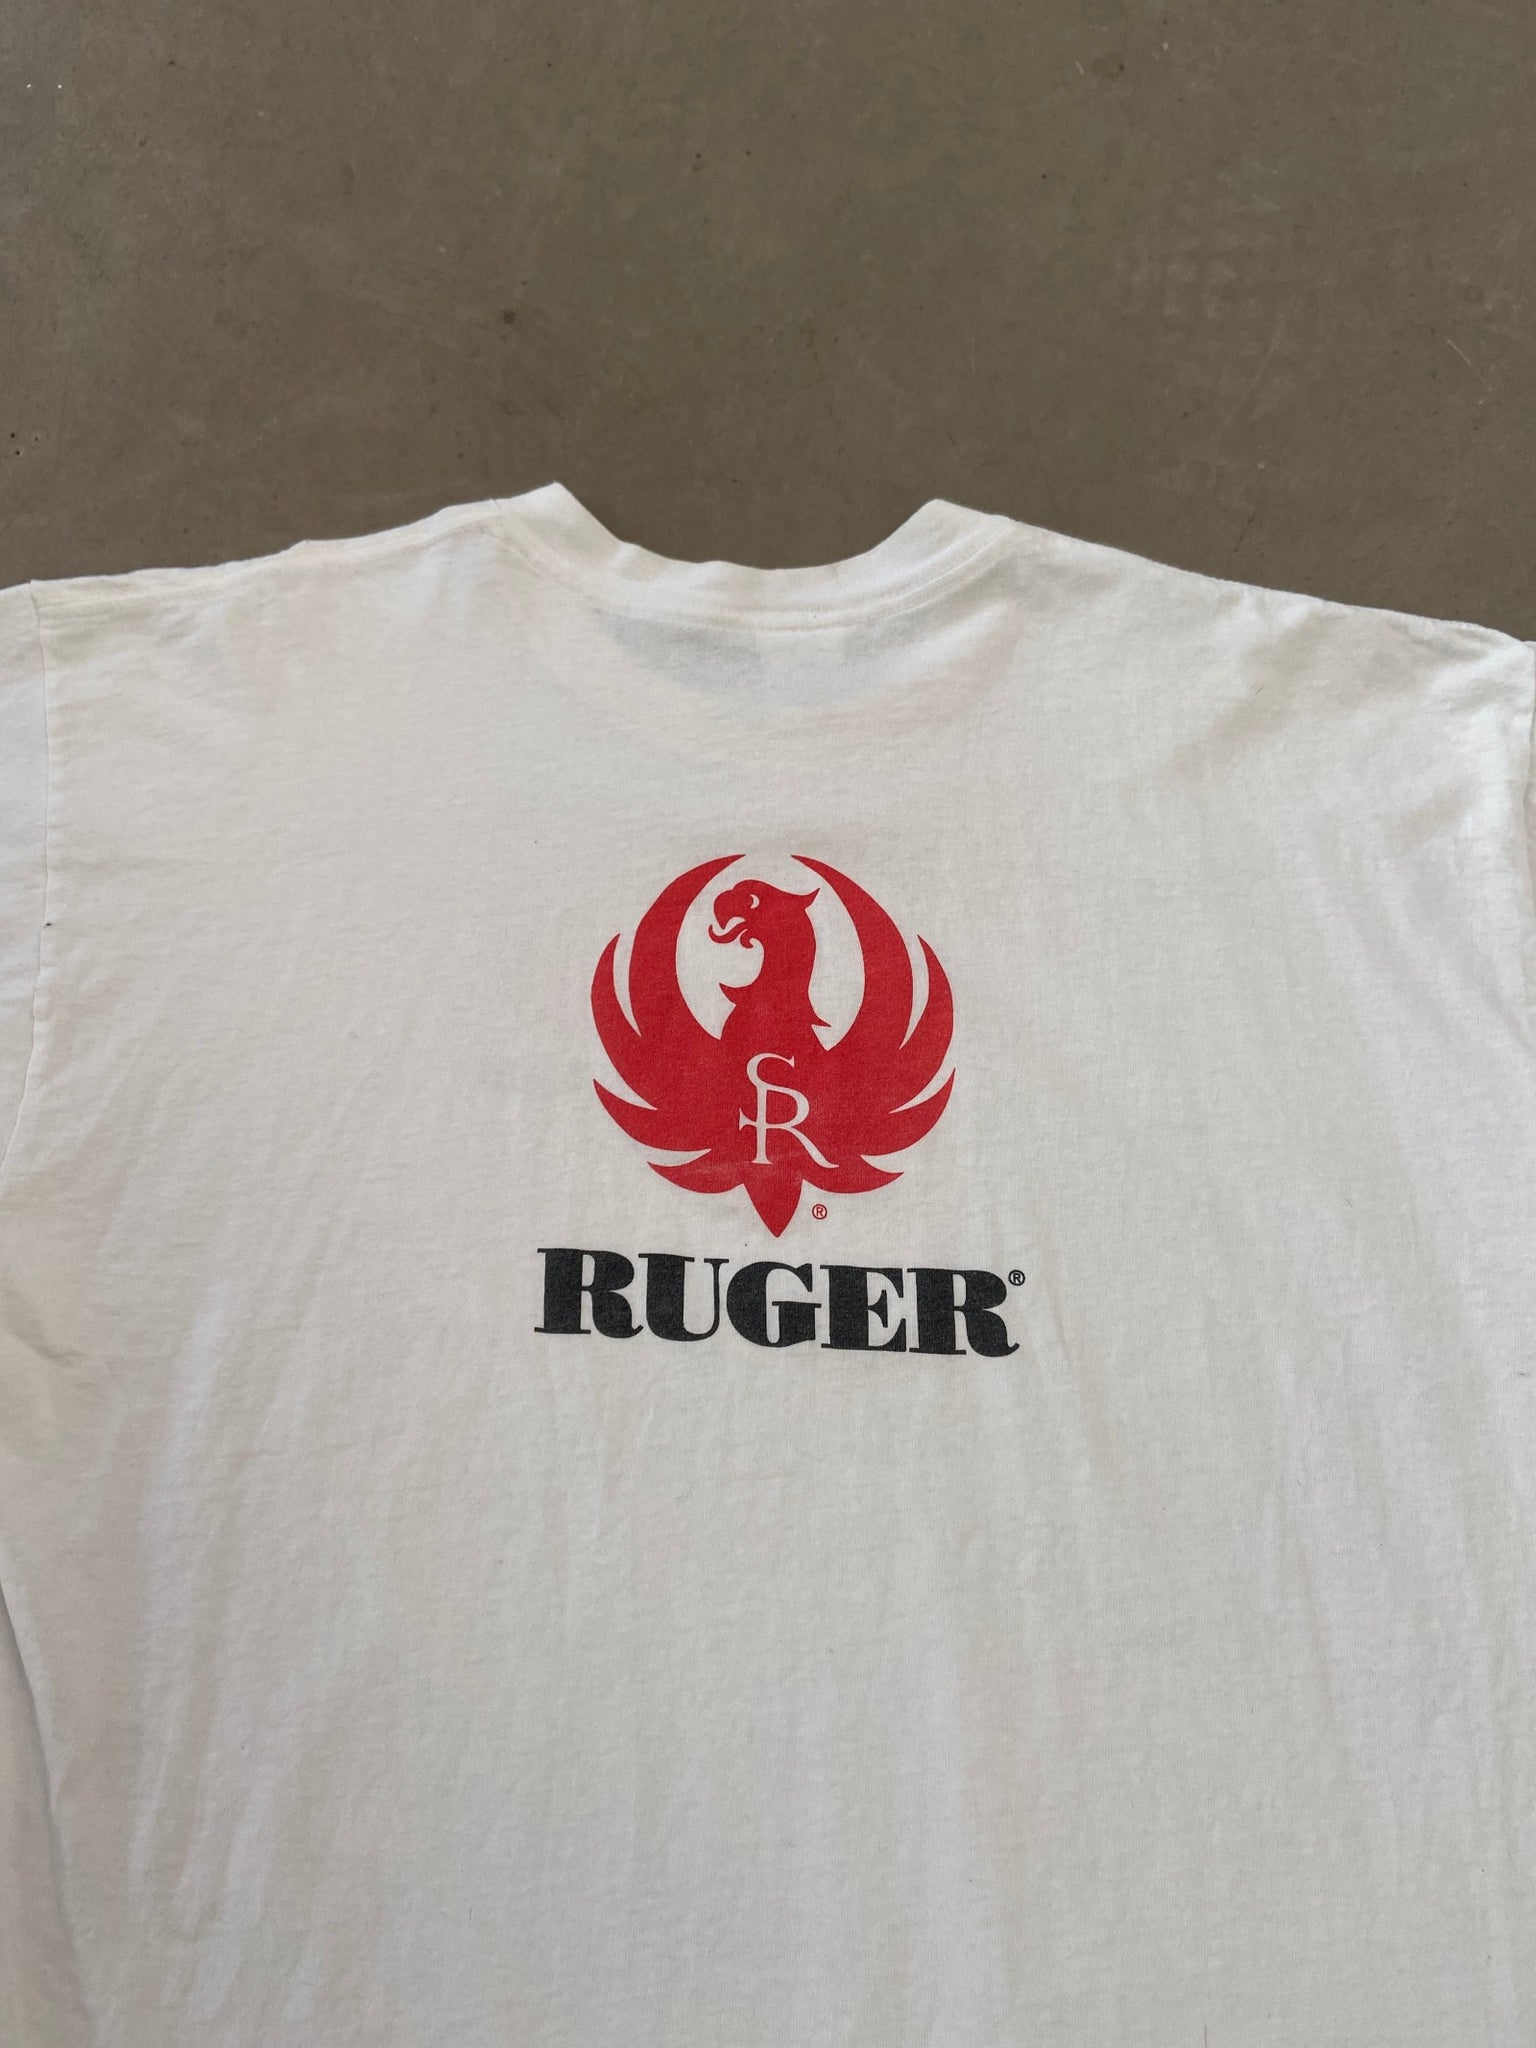 1990's Ruger Firearms T-shirt - XL